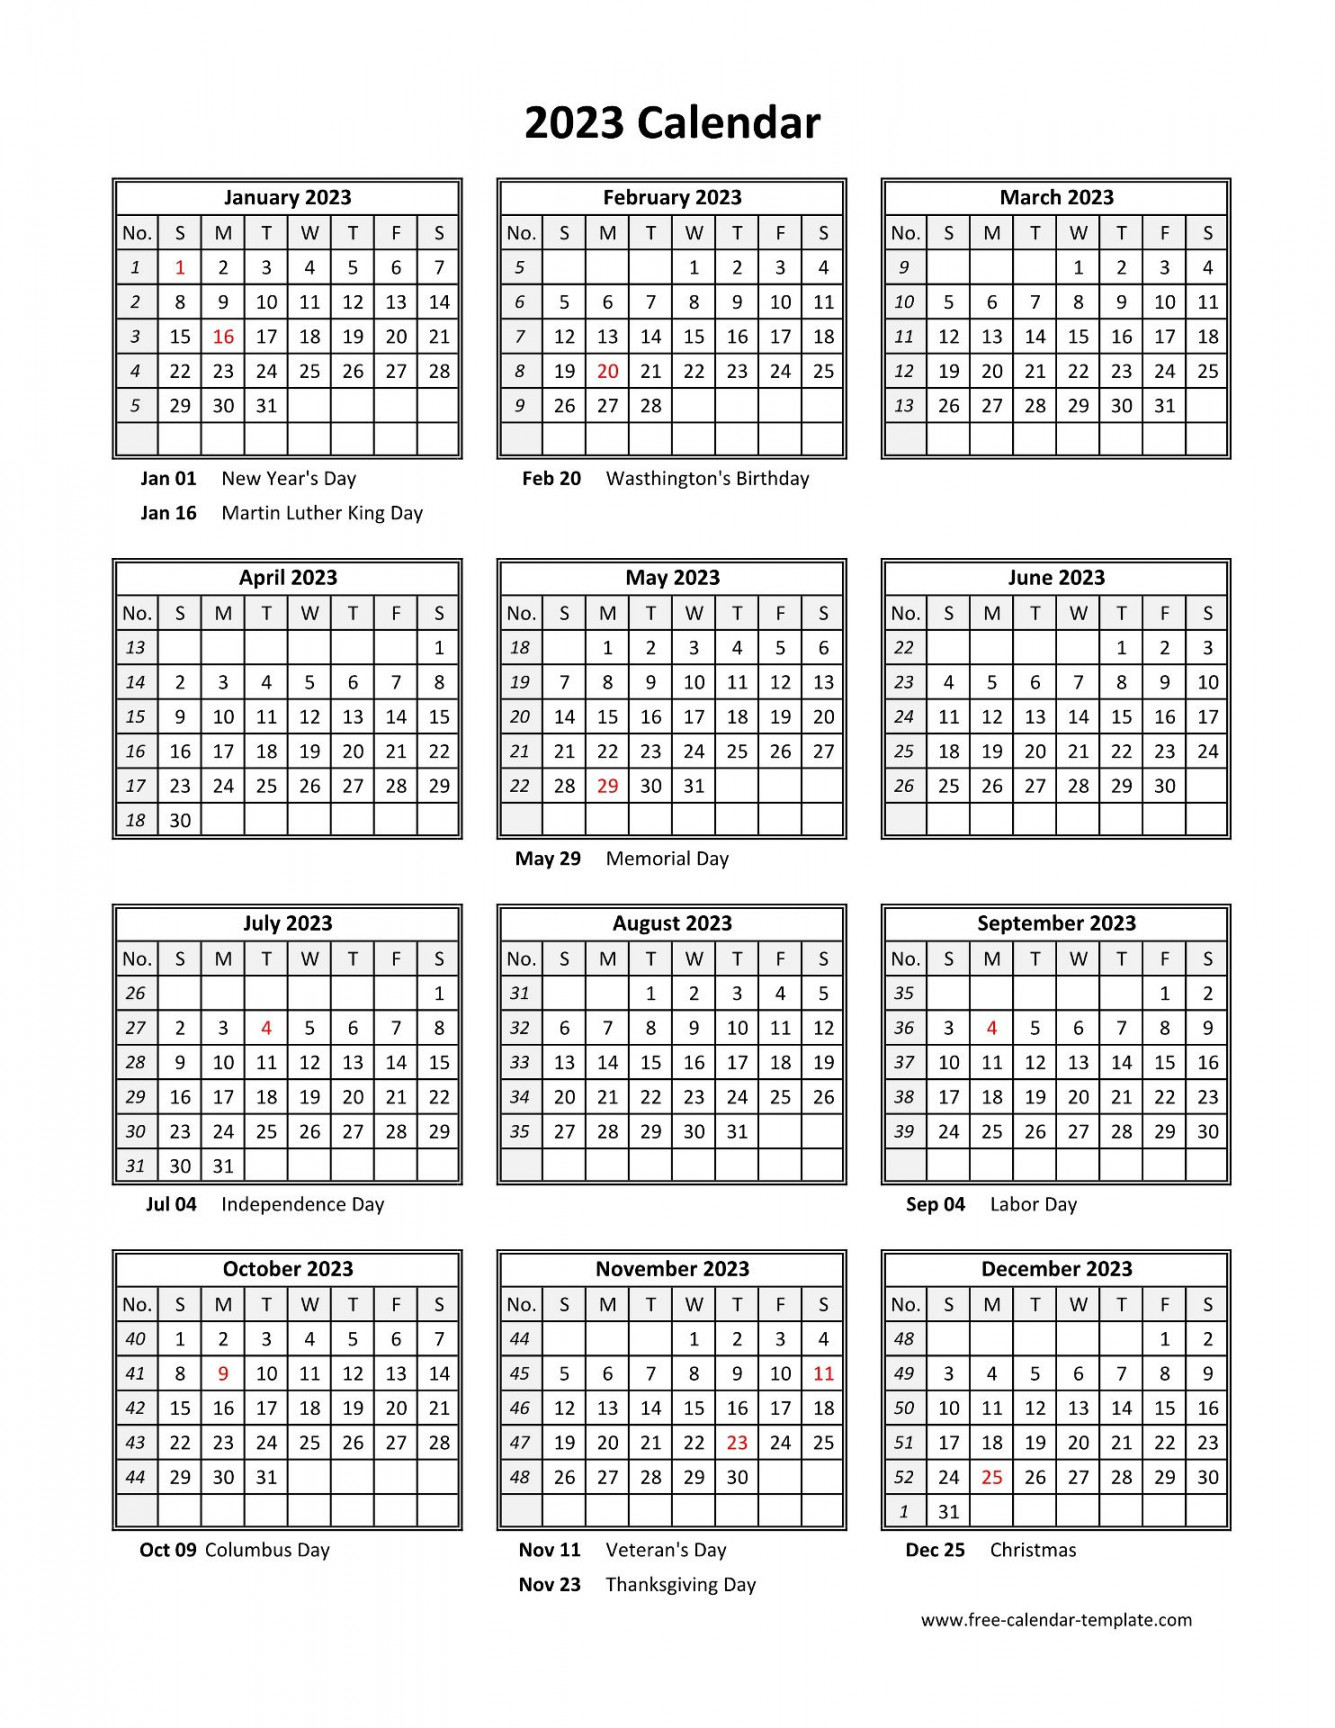 Yearly printable calendar  with holidays  Free-calendar